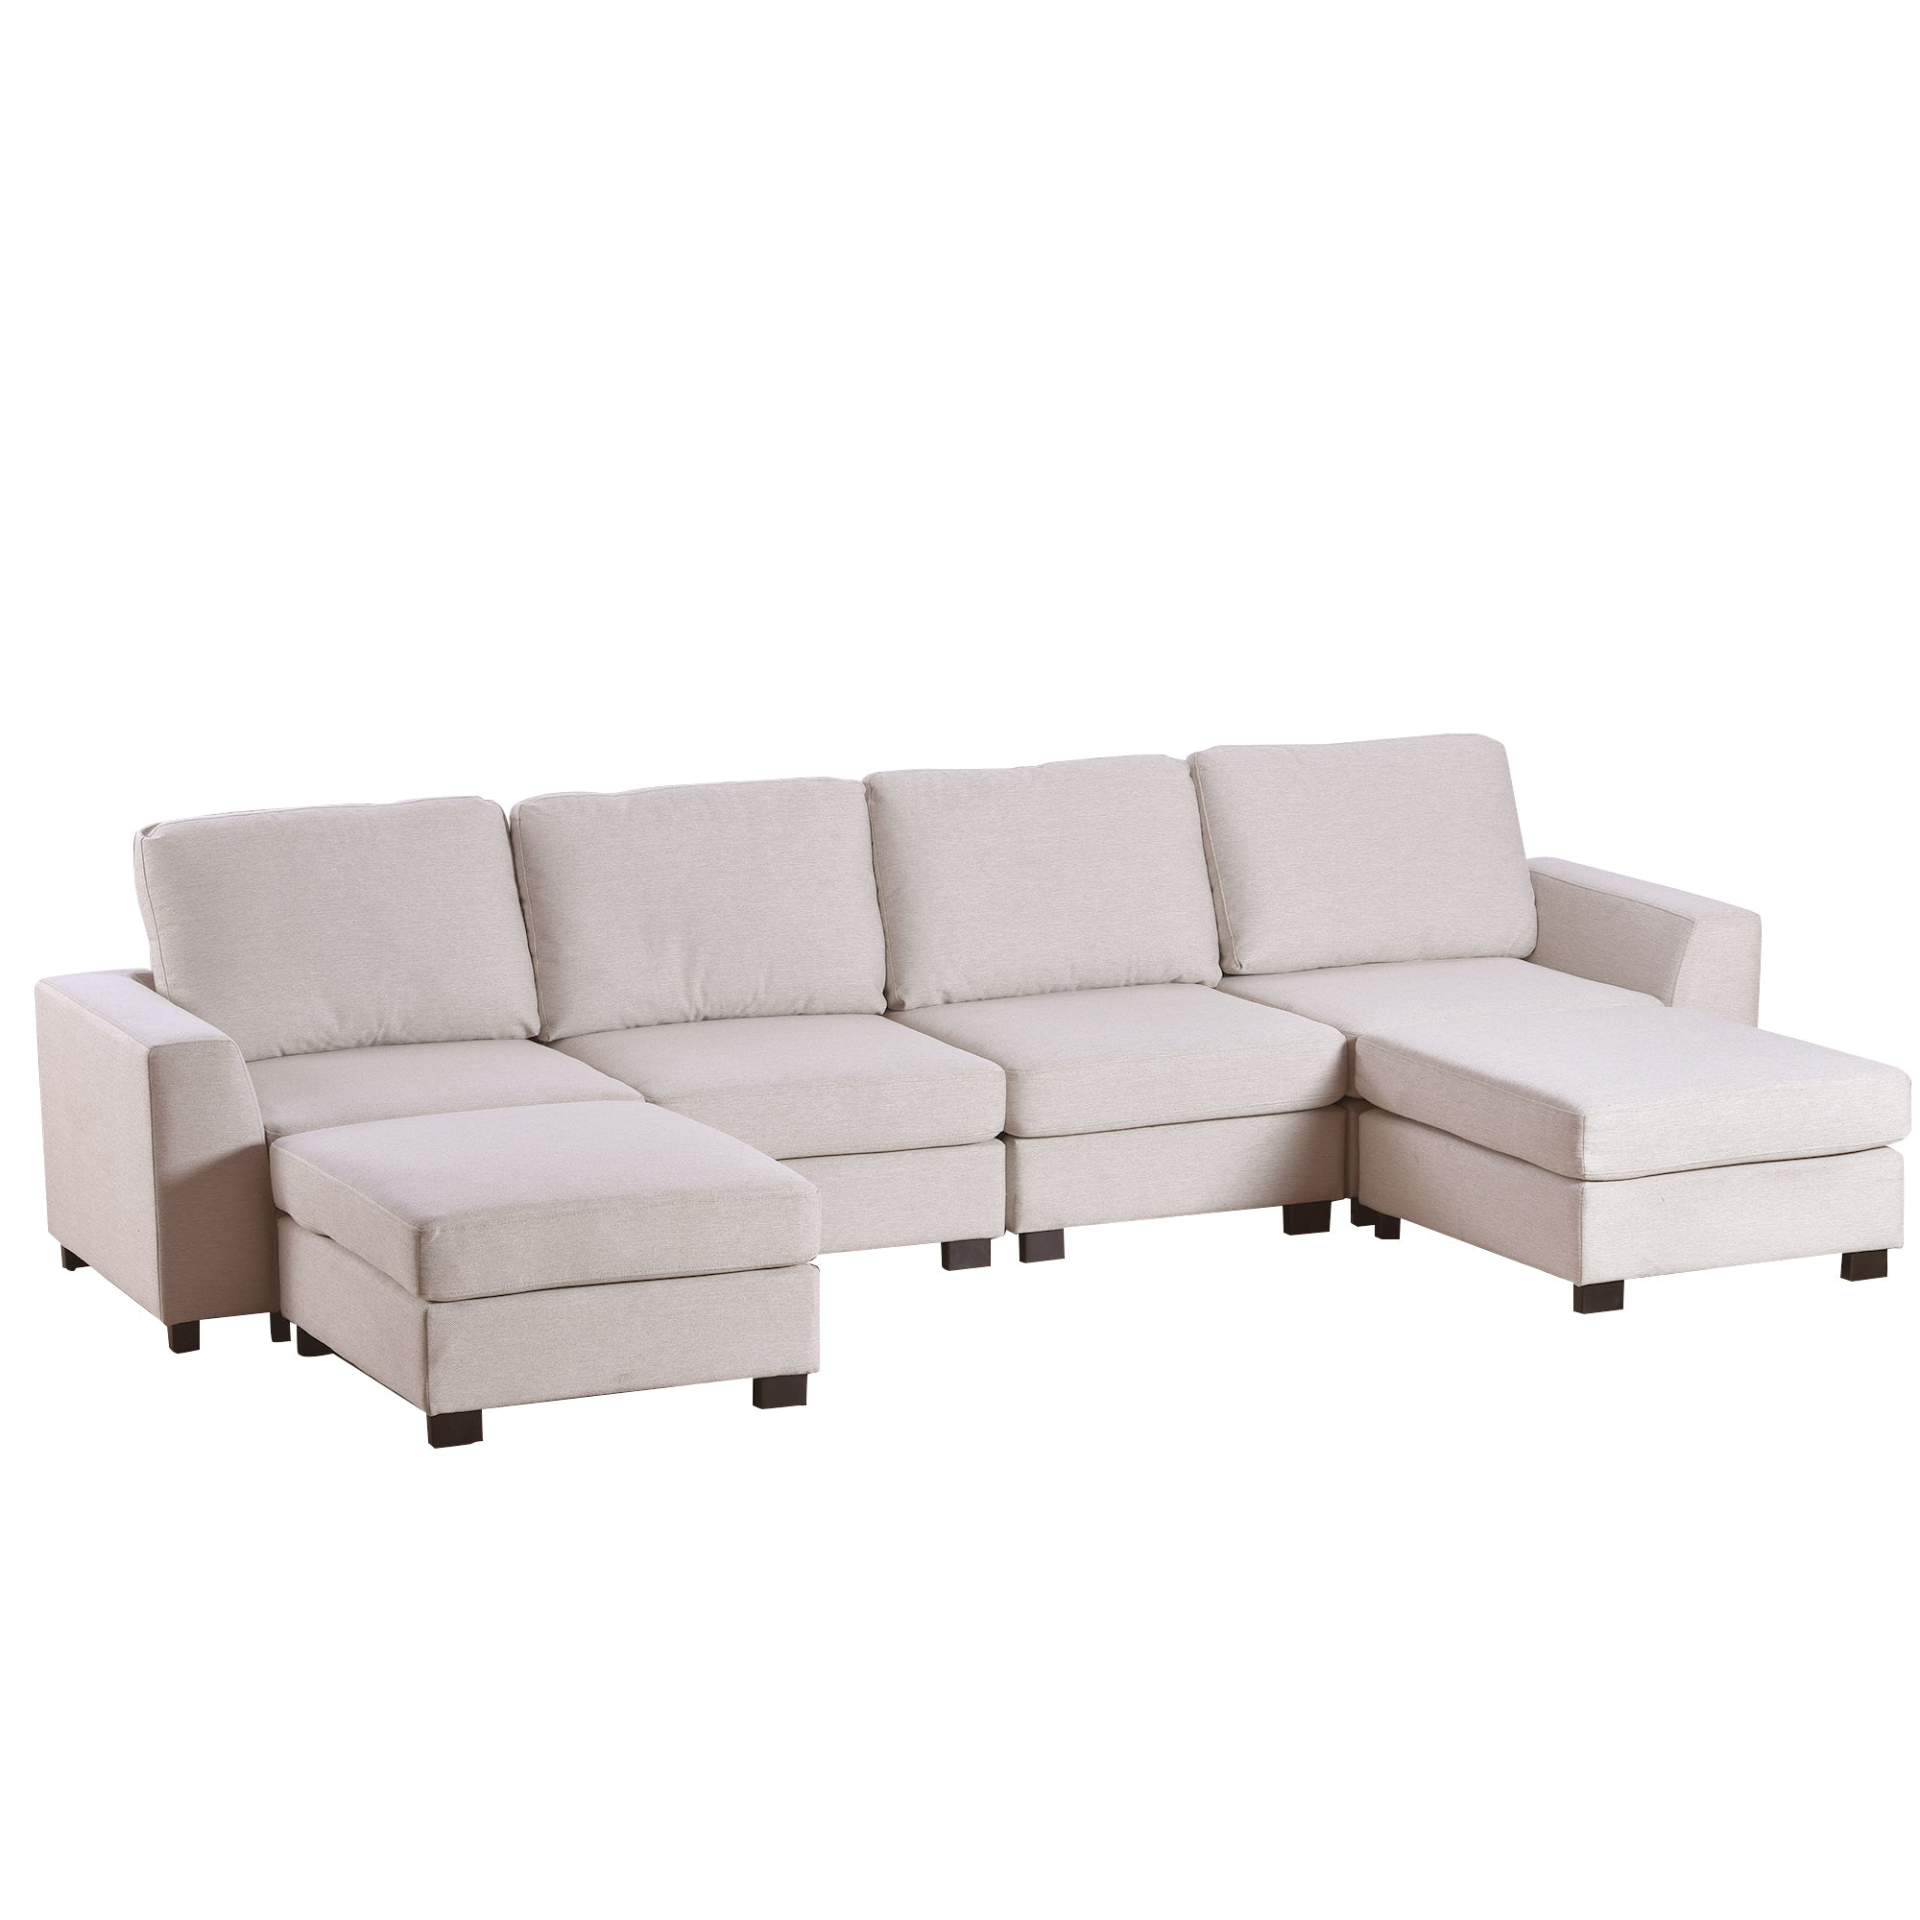 3 Pieces U shaped Sofa with Removable Ottomans - 33943176_large_ec26a607-7afd-49fa-aa4a-26dfb30ed1fb